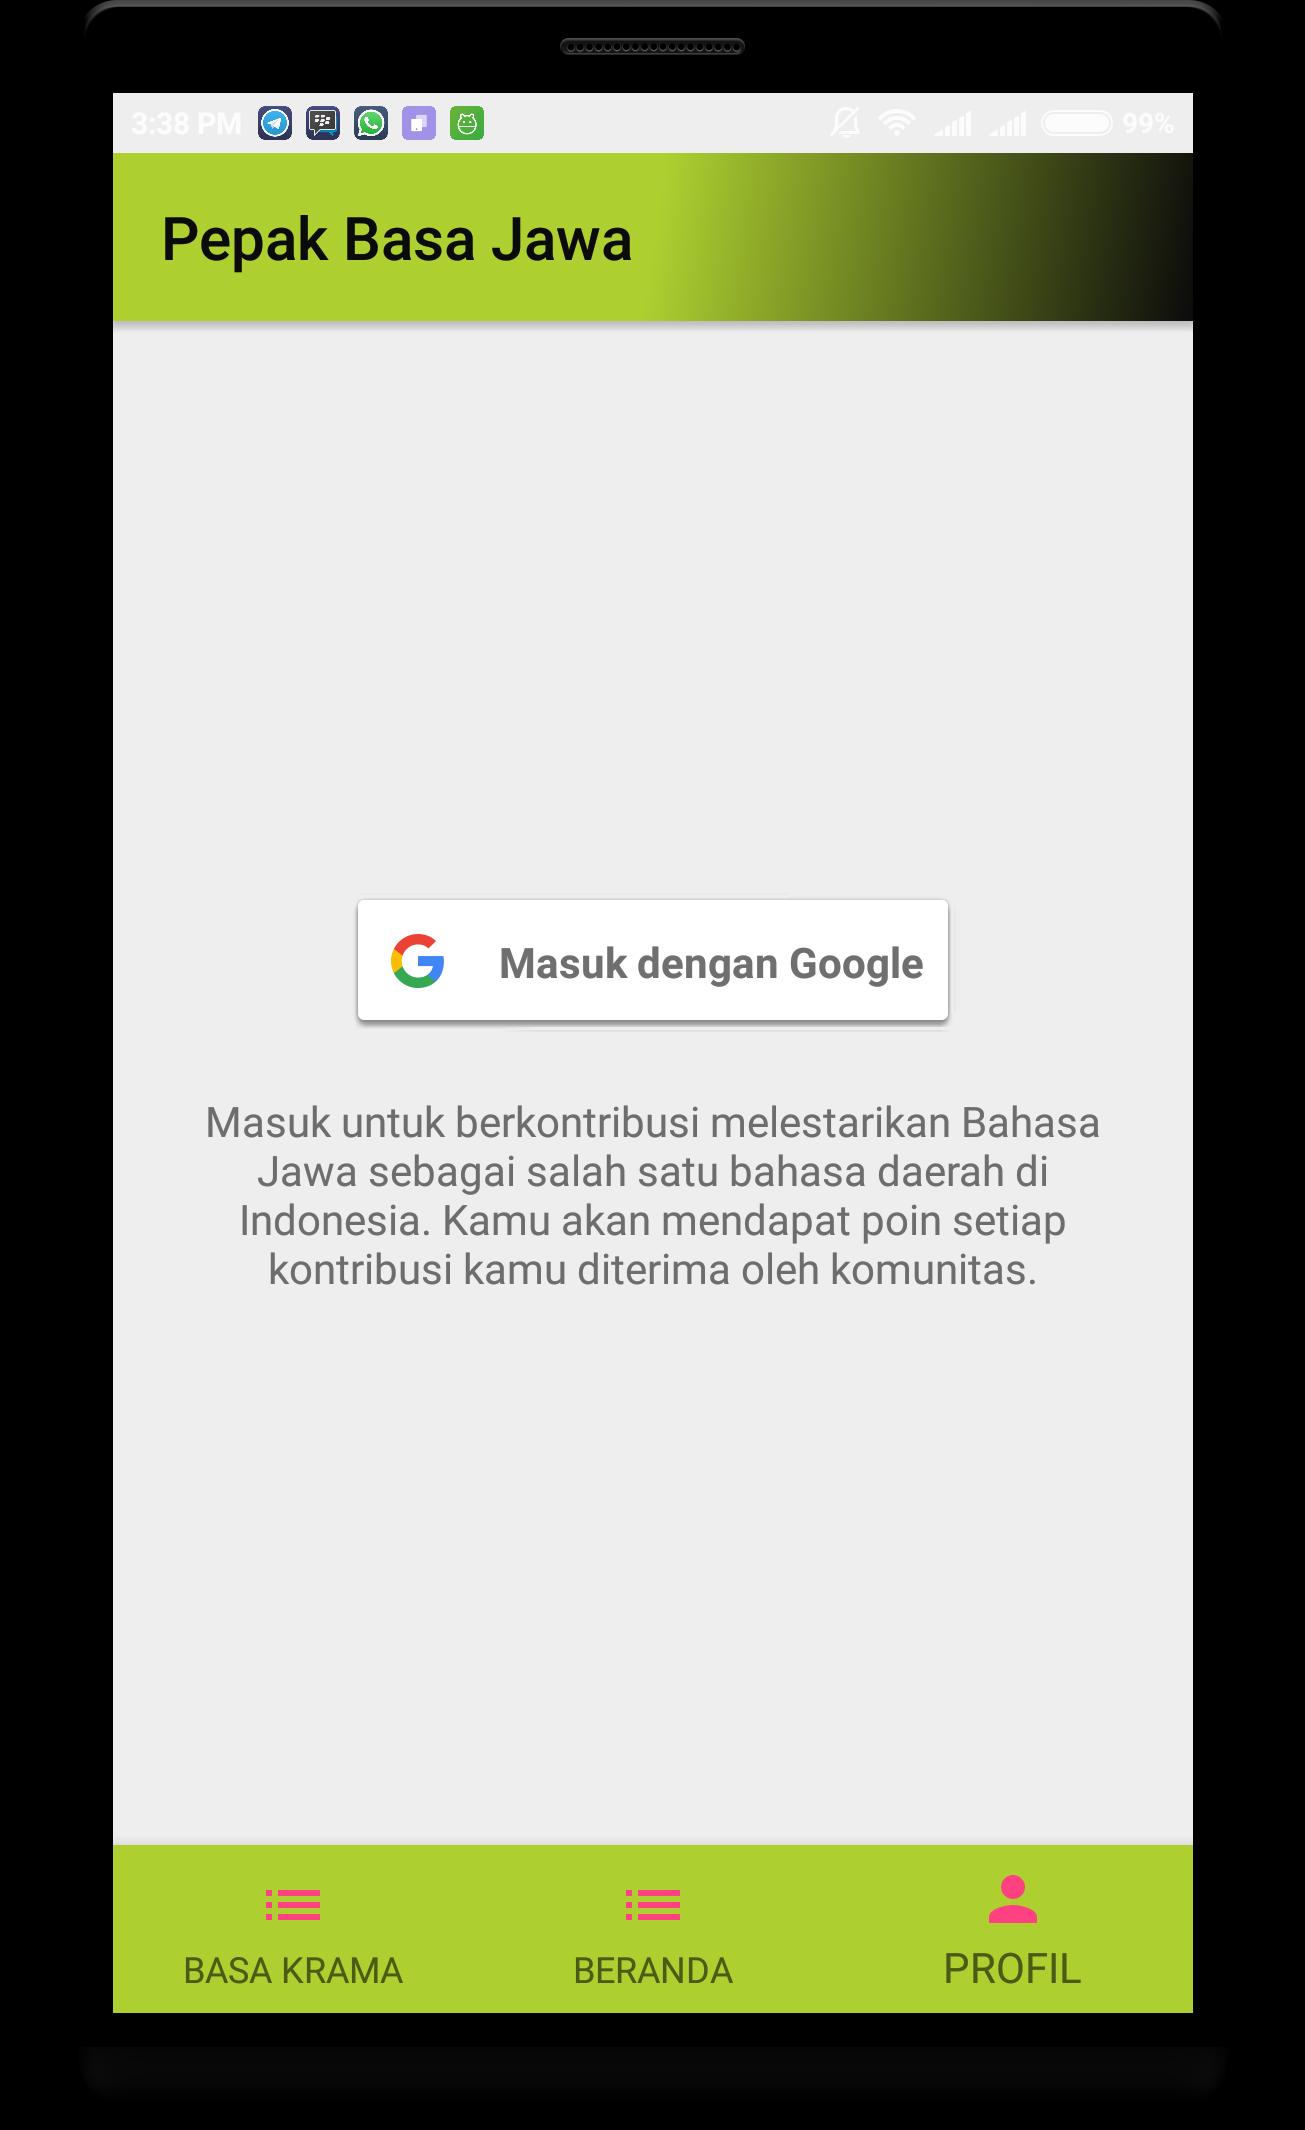 Pepak Basa Jawa for Android - APK Download